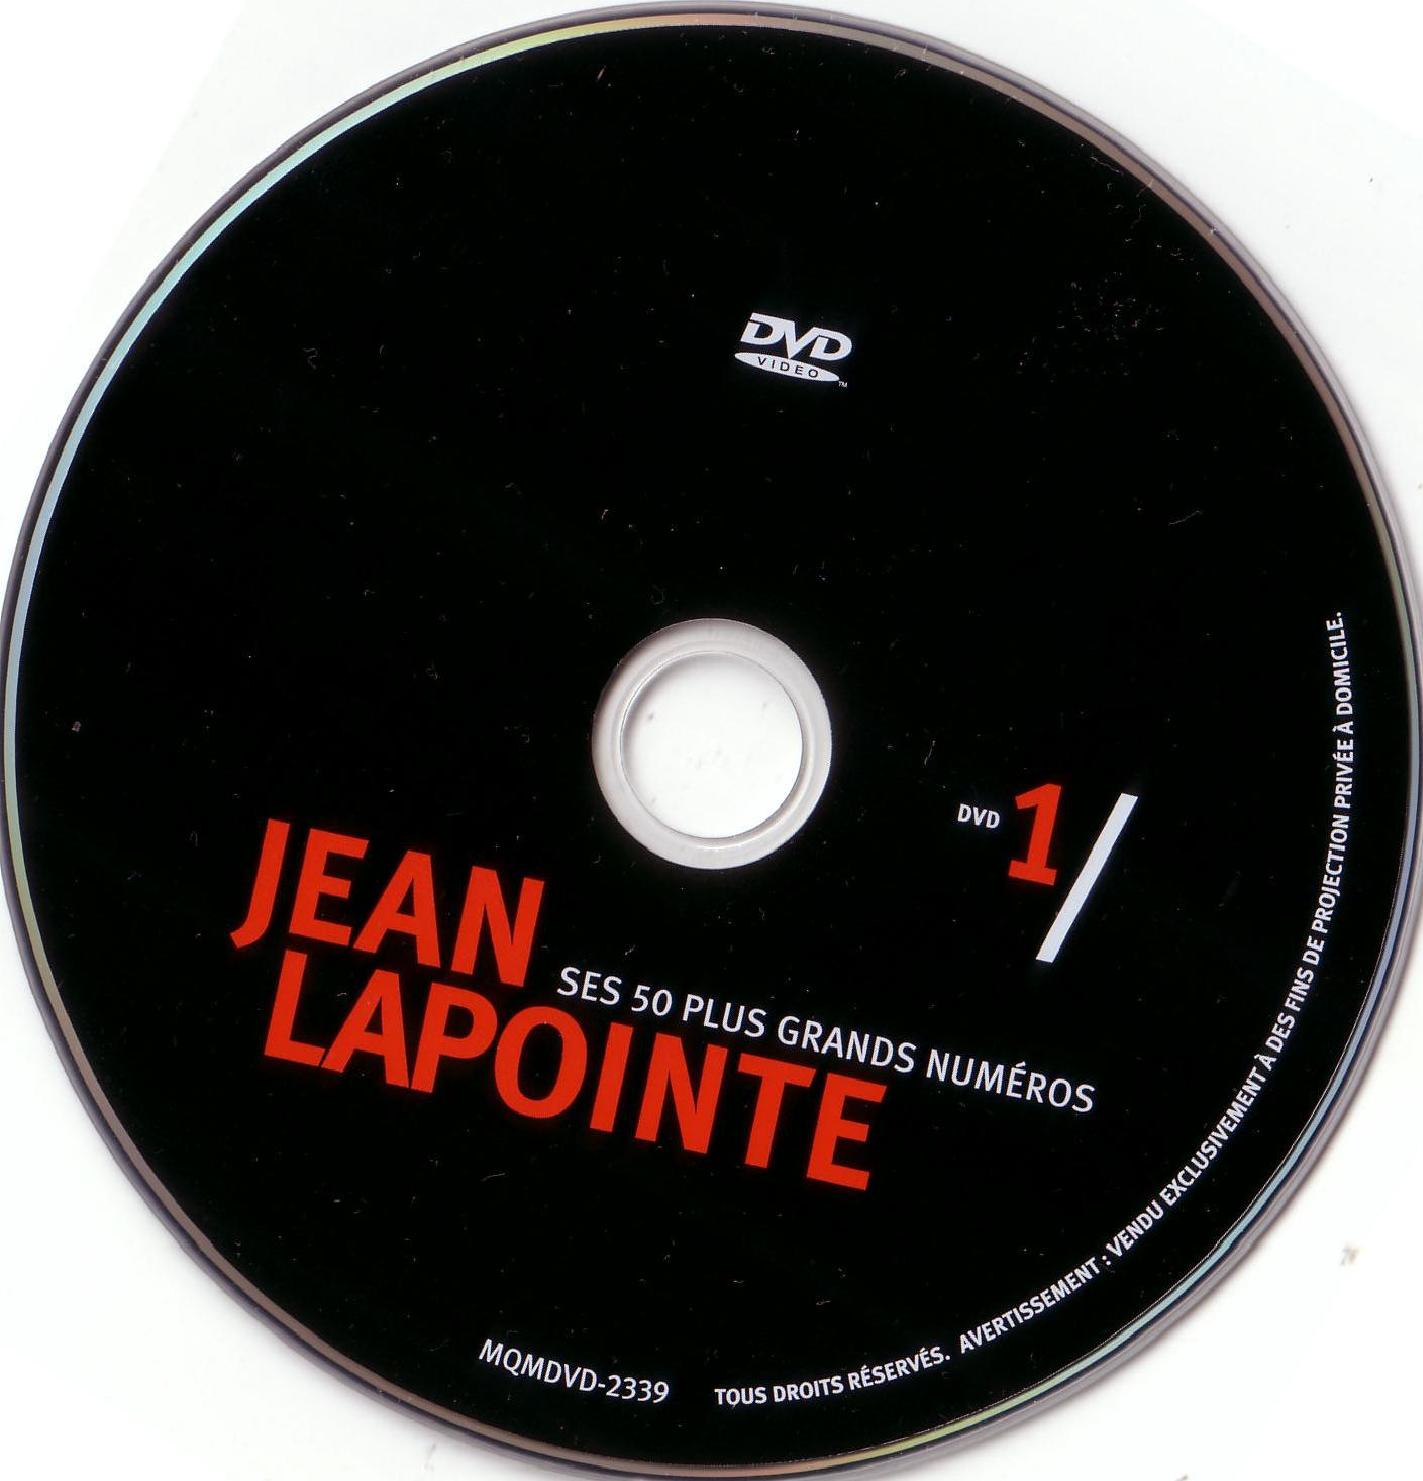 Jean Lapointe disc 1